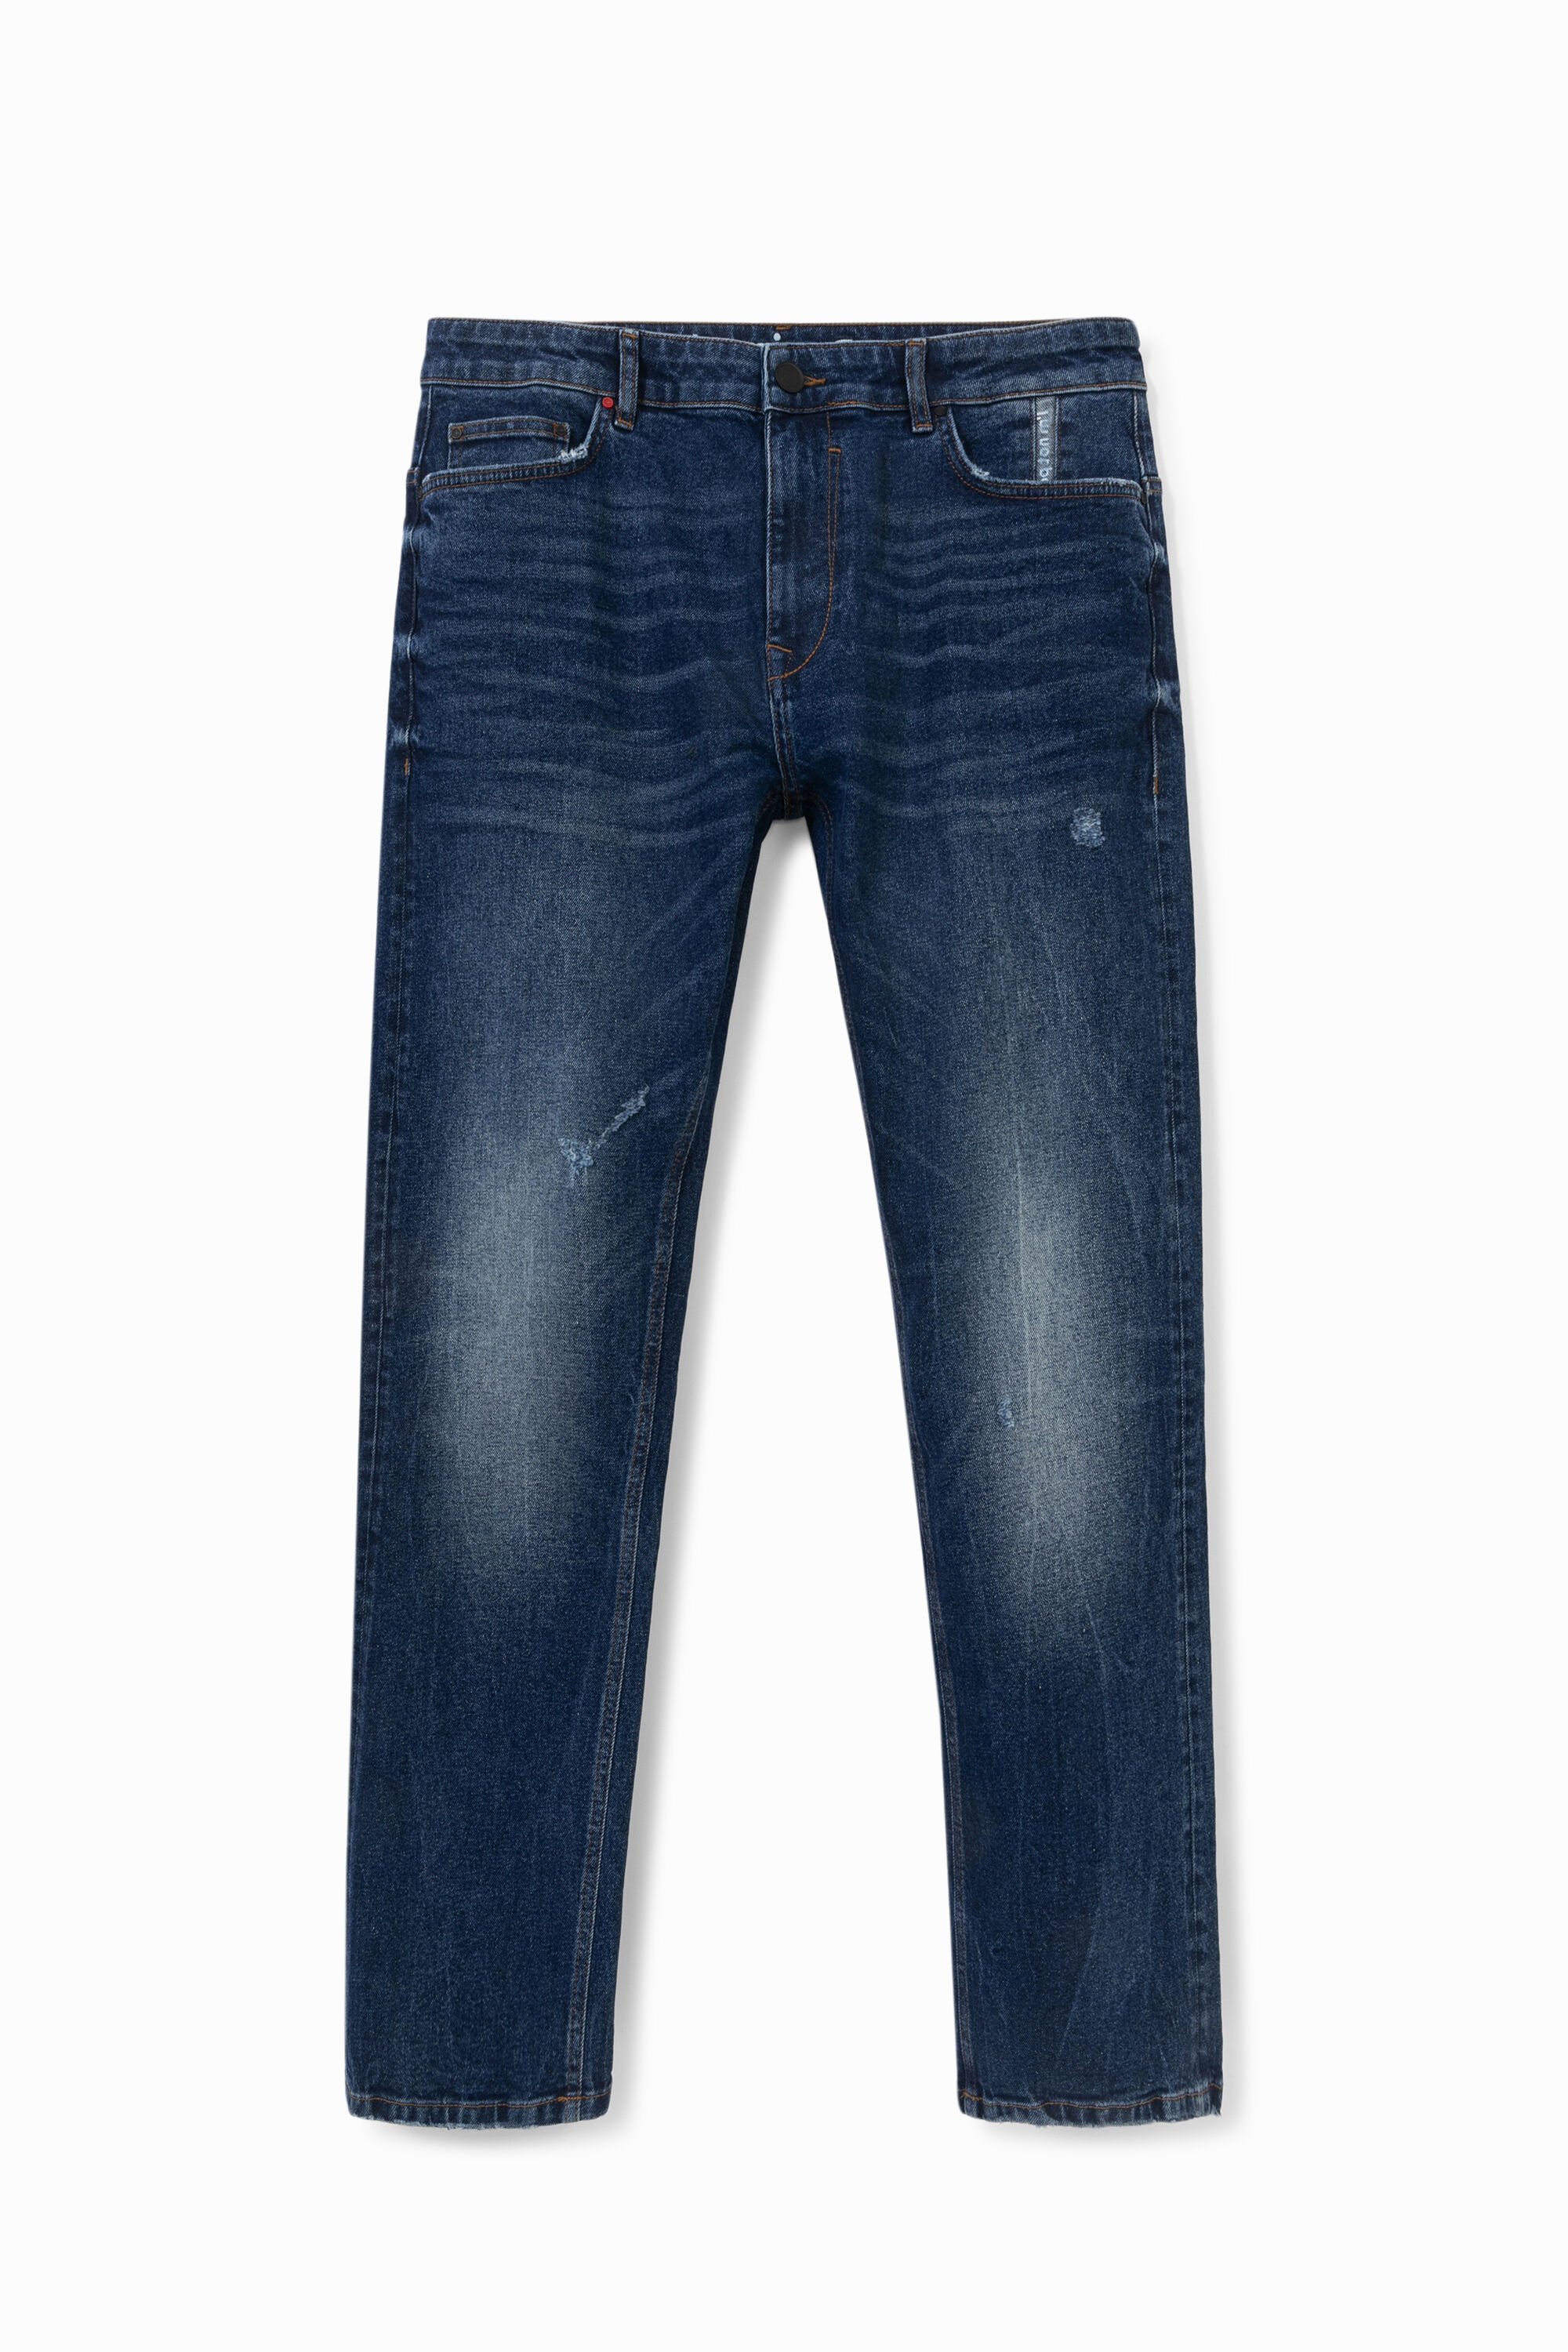 Desigual Long Jeans In Blue